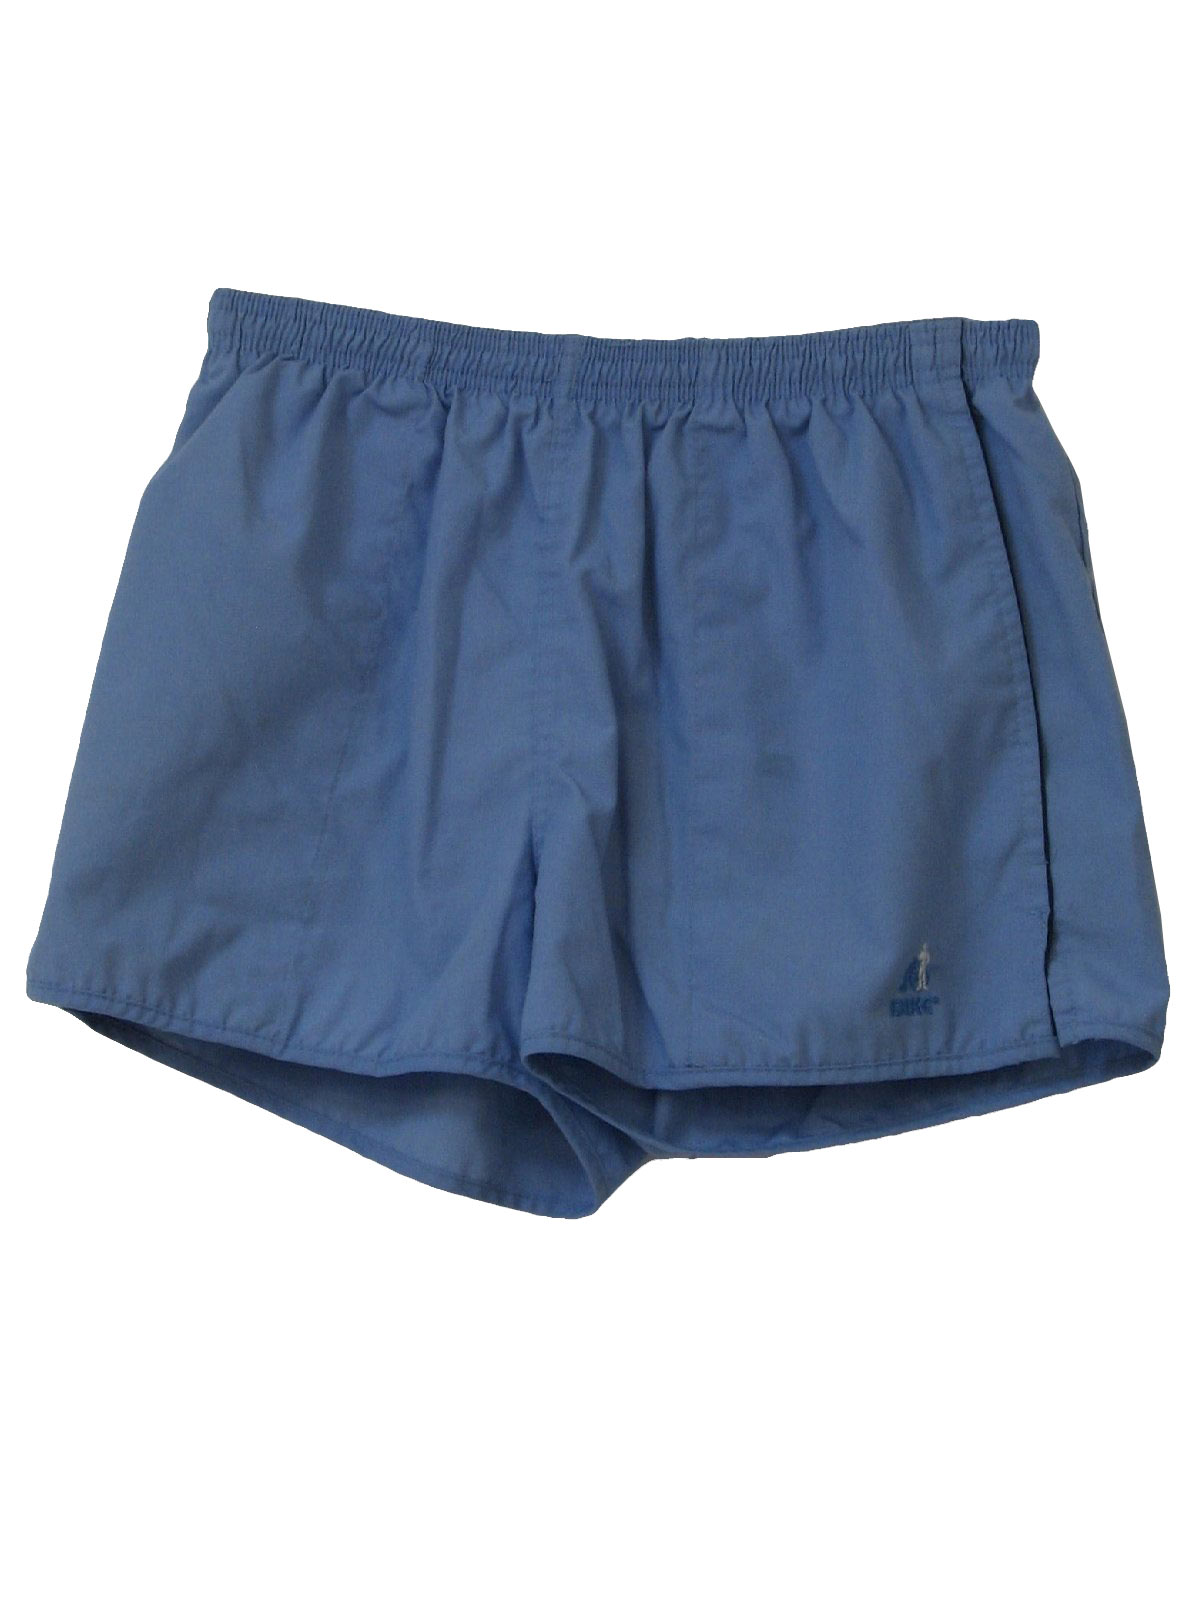 Retro 90s Shorts (Bike) : 90s -Bike- Mens light blue polyester and ...